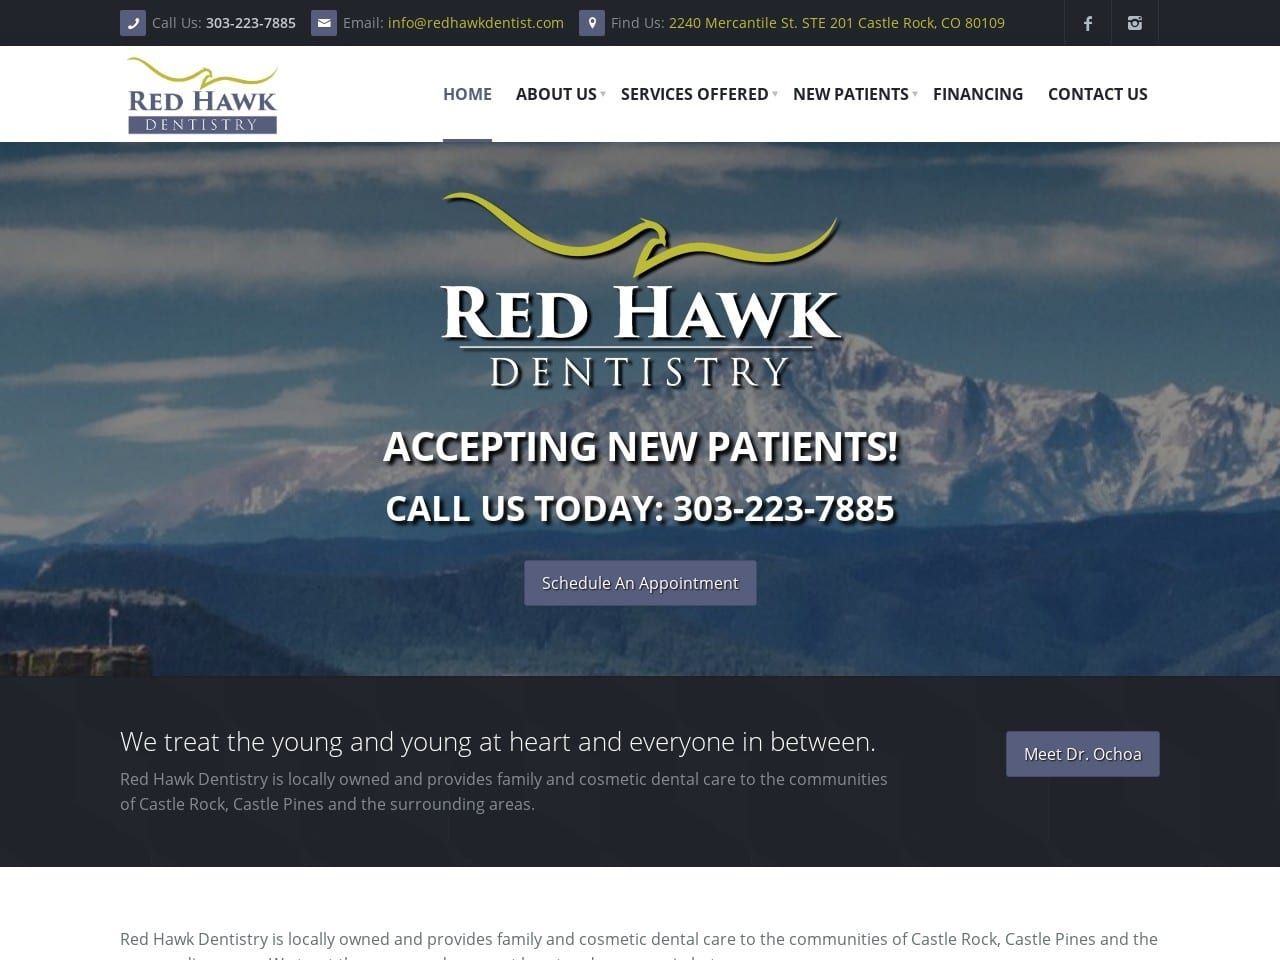 Red Hawk Dentistry Website Screenshot from redhawkdentist.com